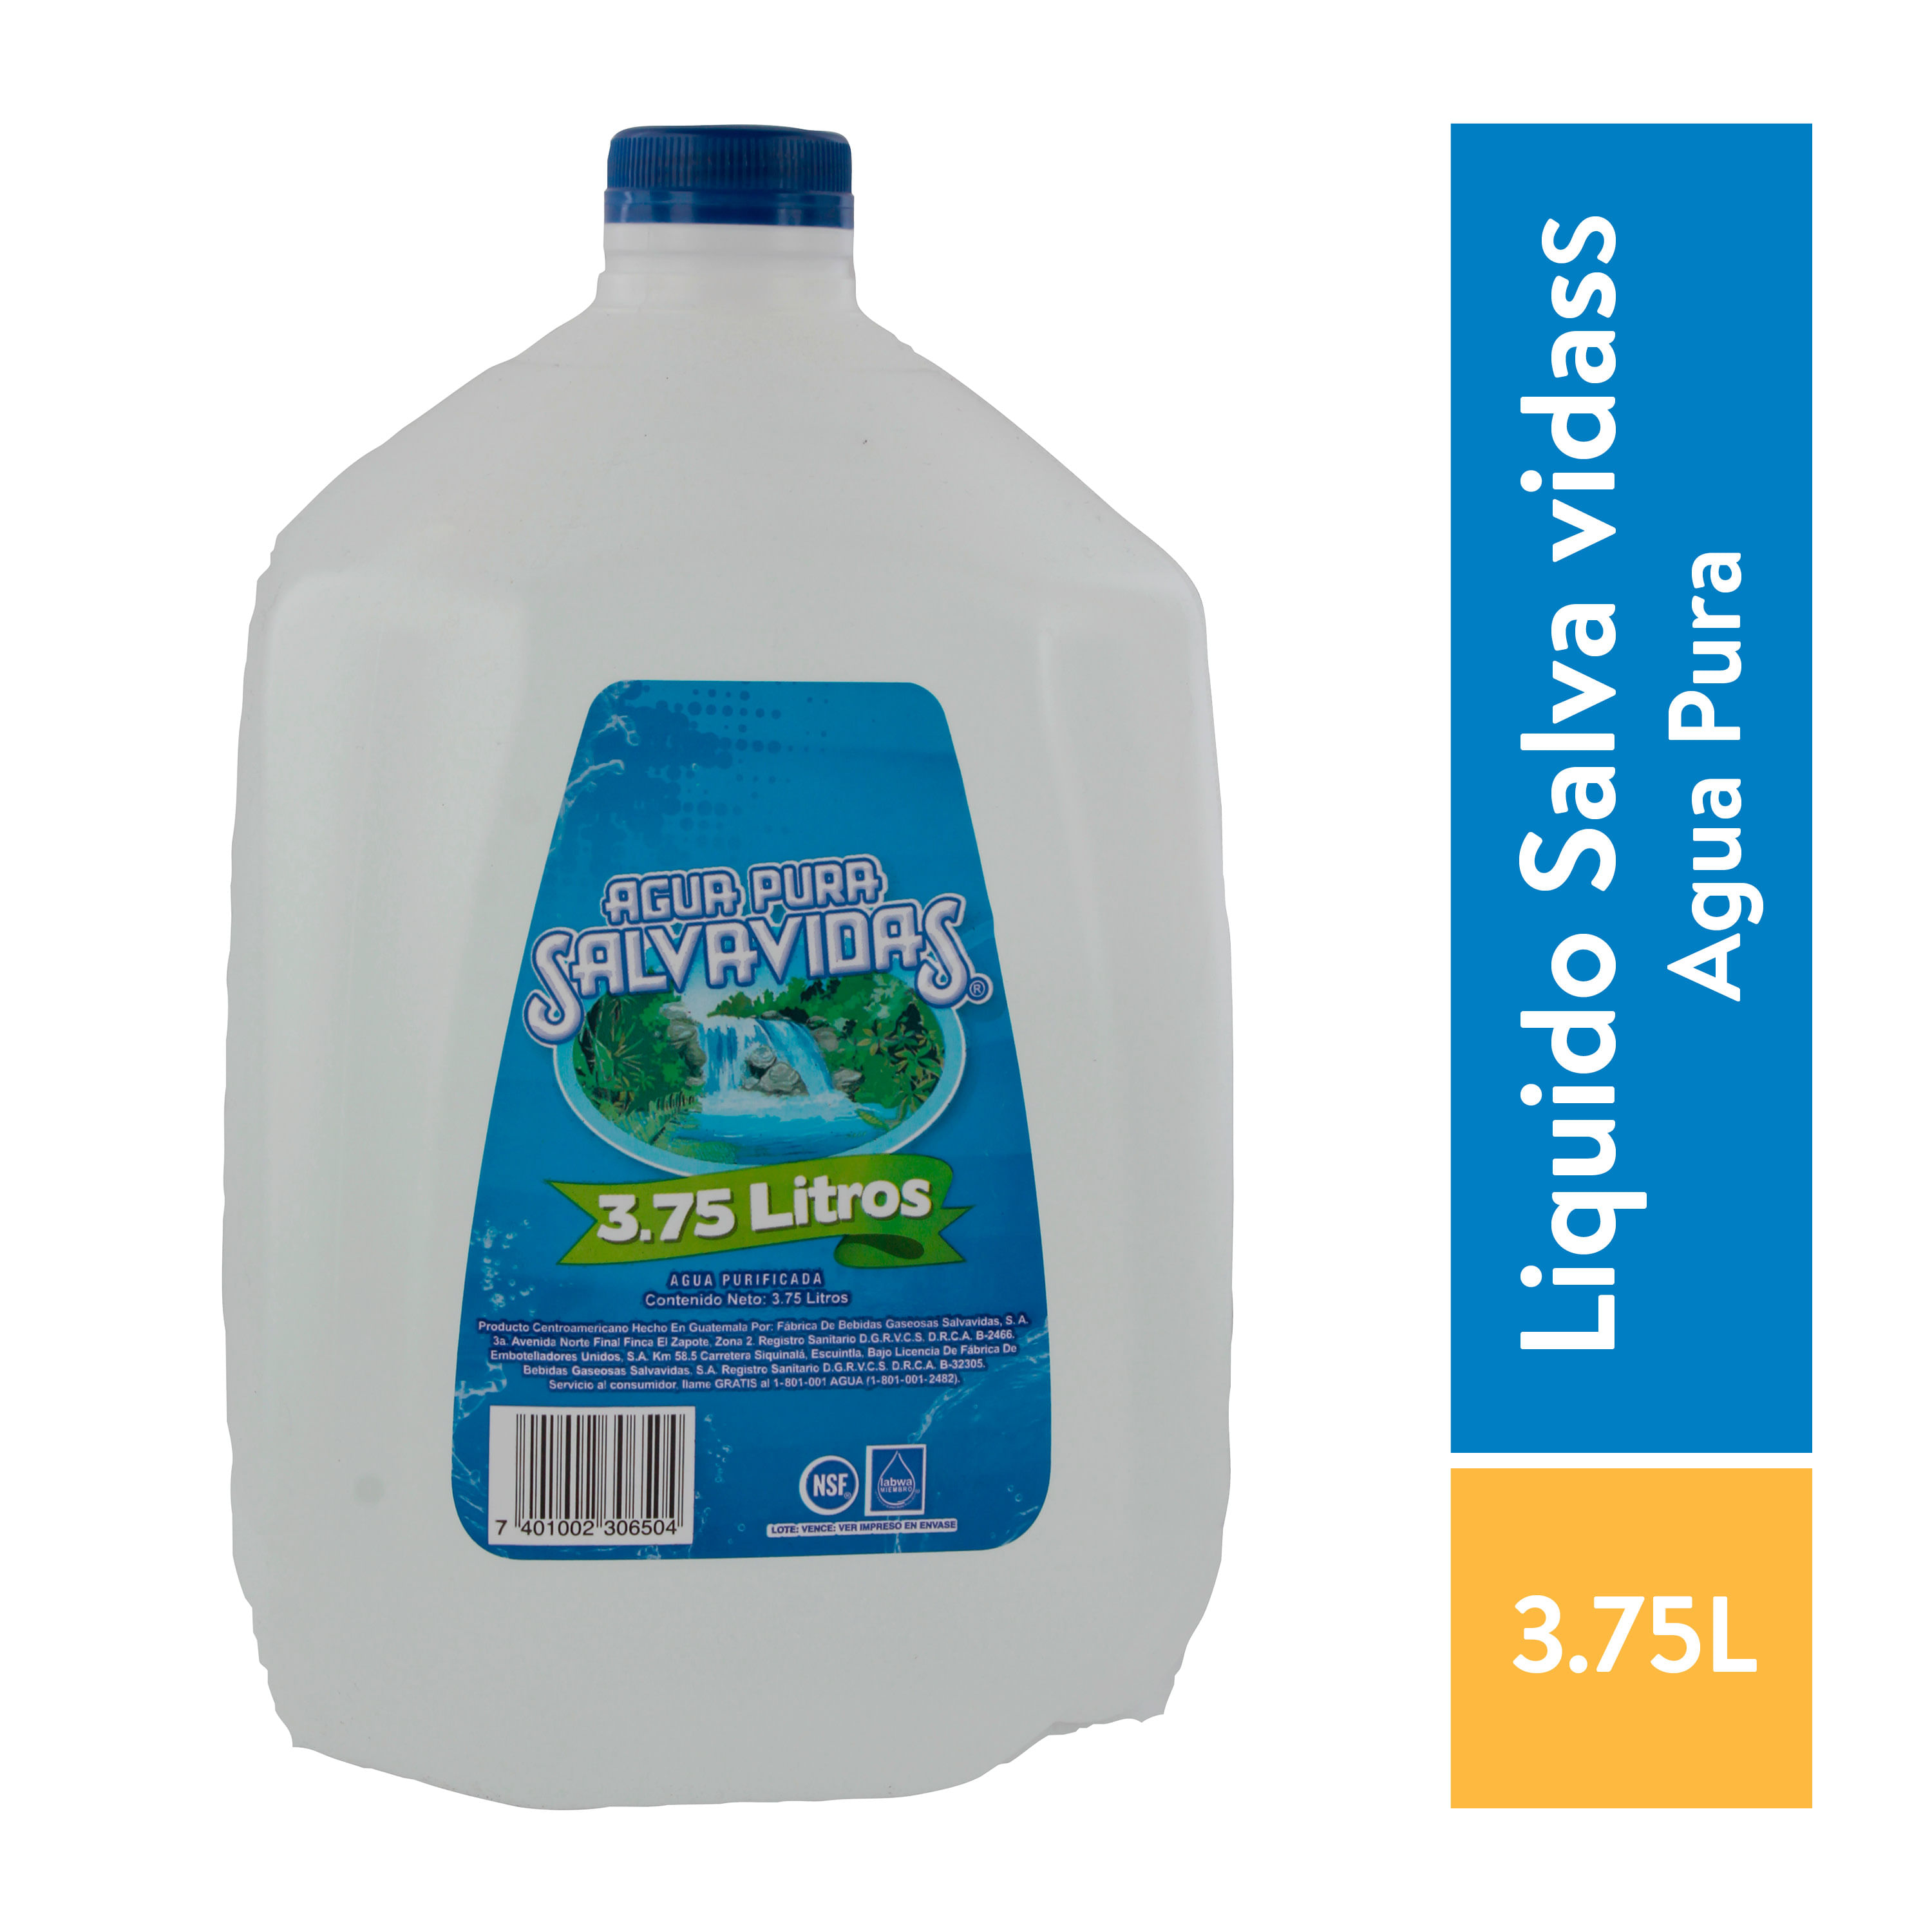 Comprar Agua Great Value Purificada - 500ml, Walmart Guatemala - Maxi  Despensa